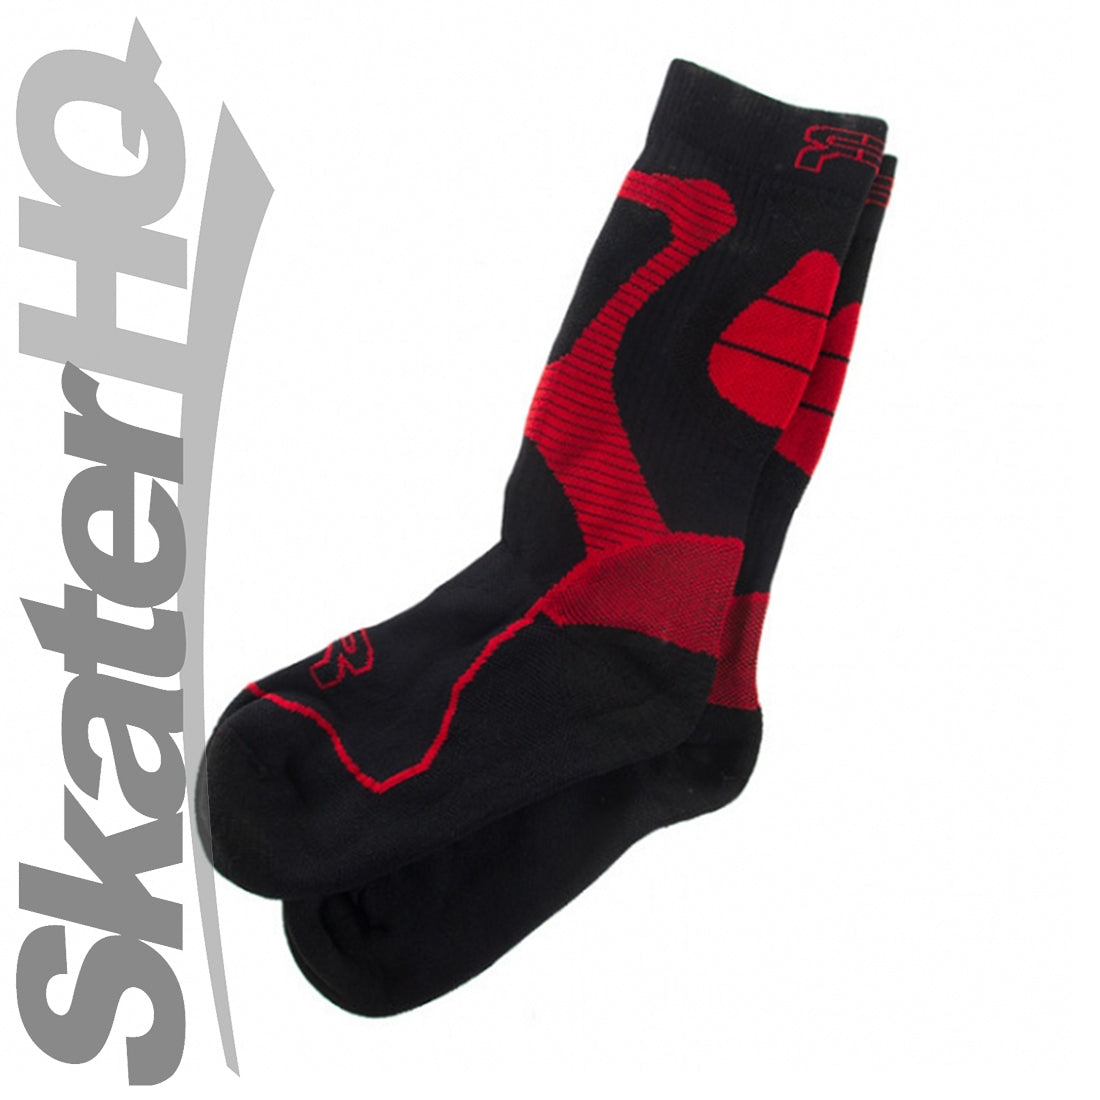 FR Nano Sport Socks Red/Black - Medium - EU39-41 Apparel Socks